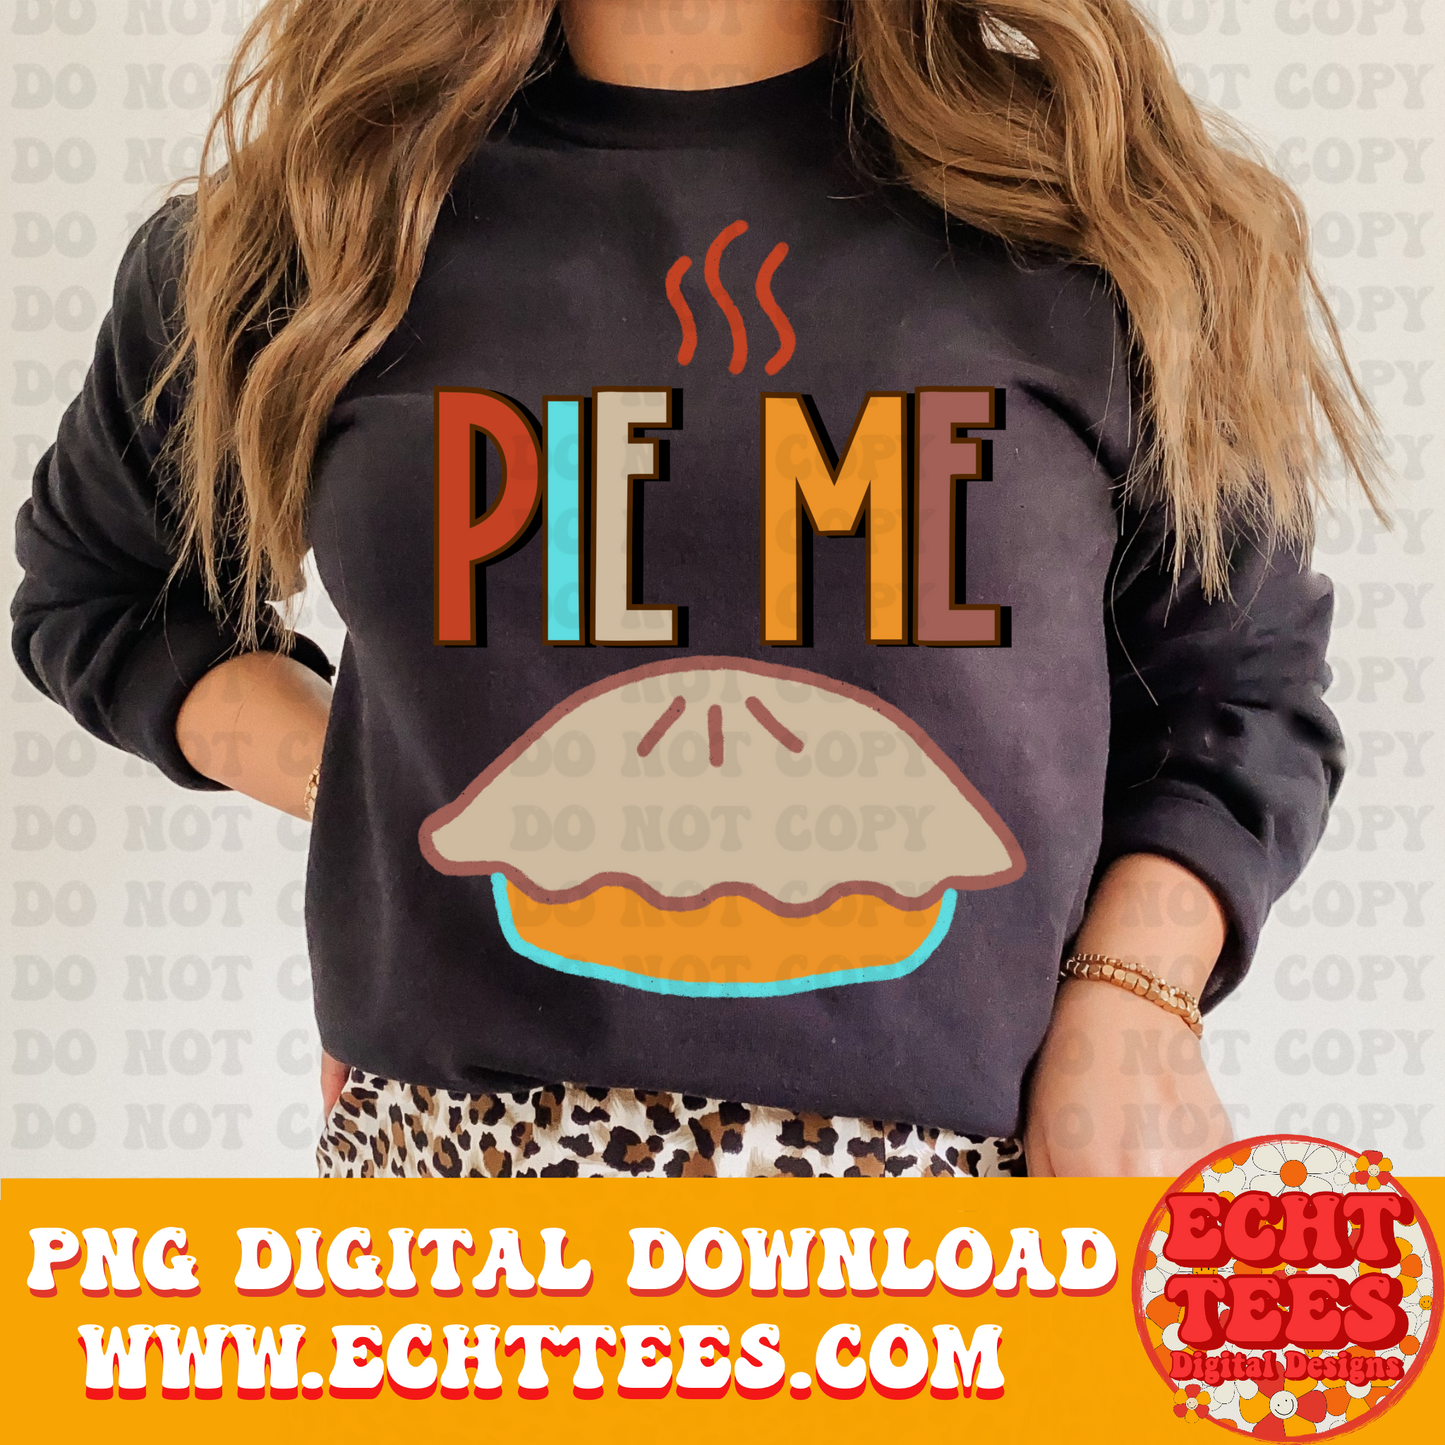 Pie Me PNG Digital Download